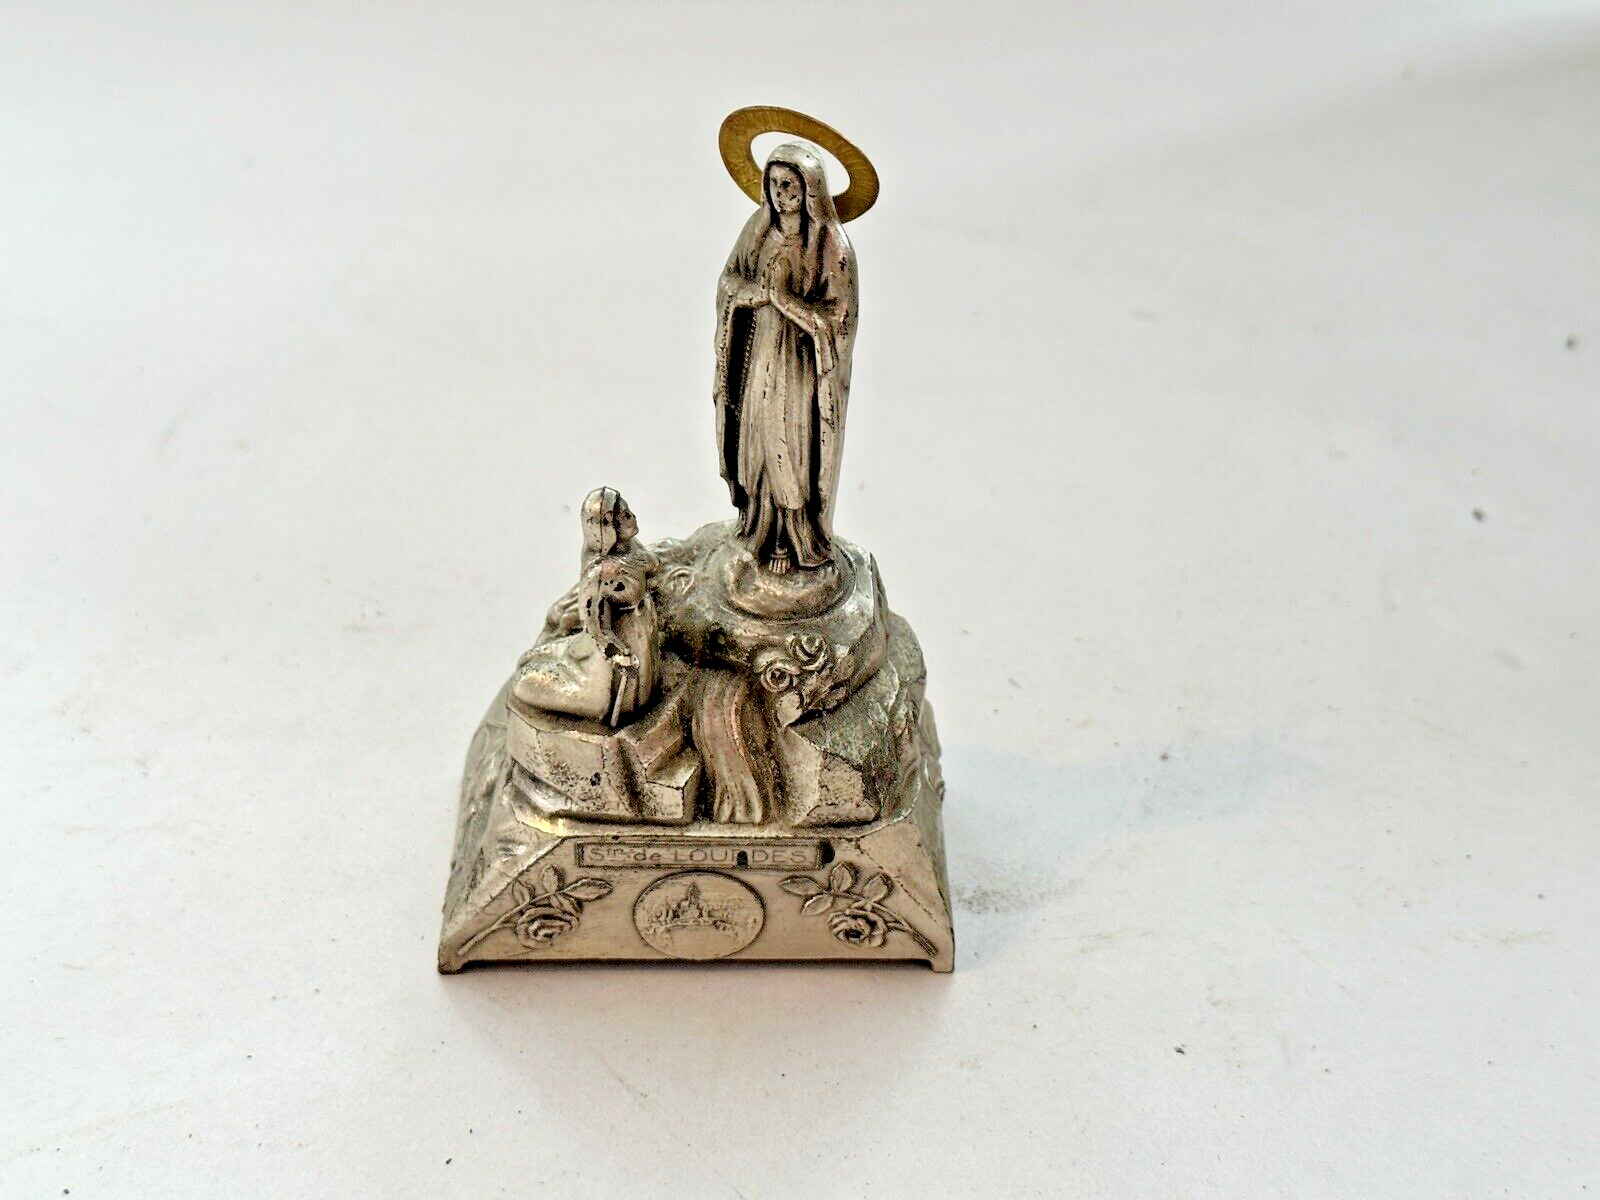 Vintage Silver-Tone Religious Figurine St. de Lourdes Our Lady Virgin Mary